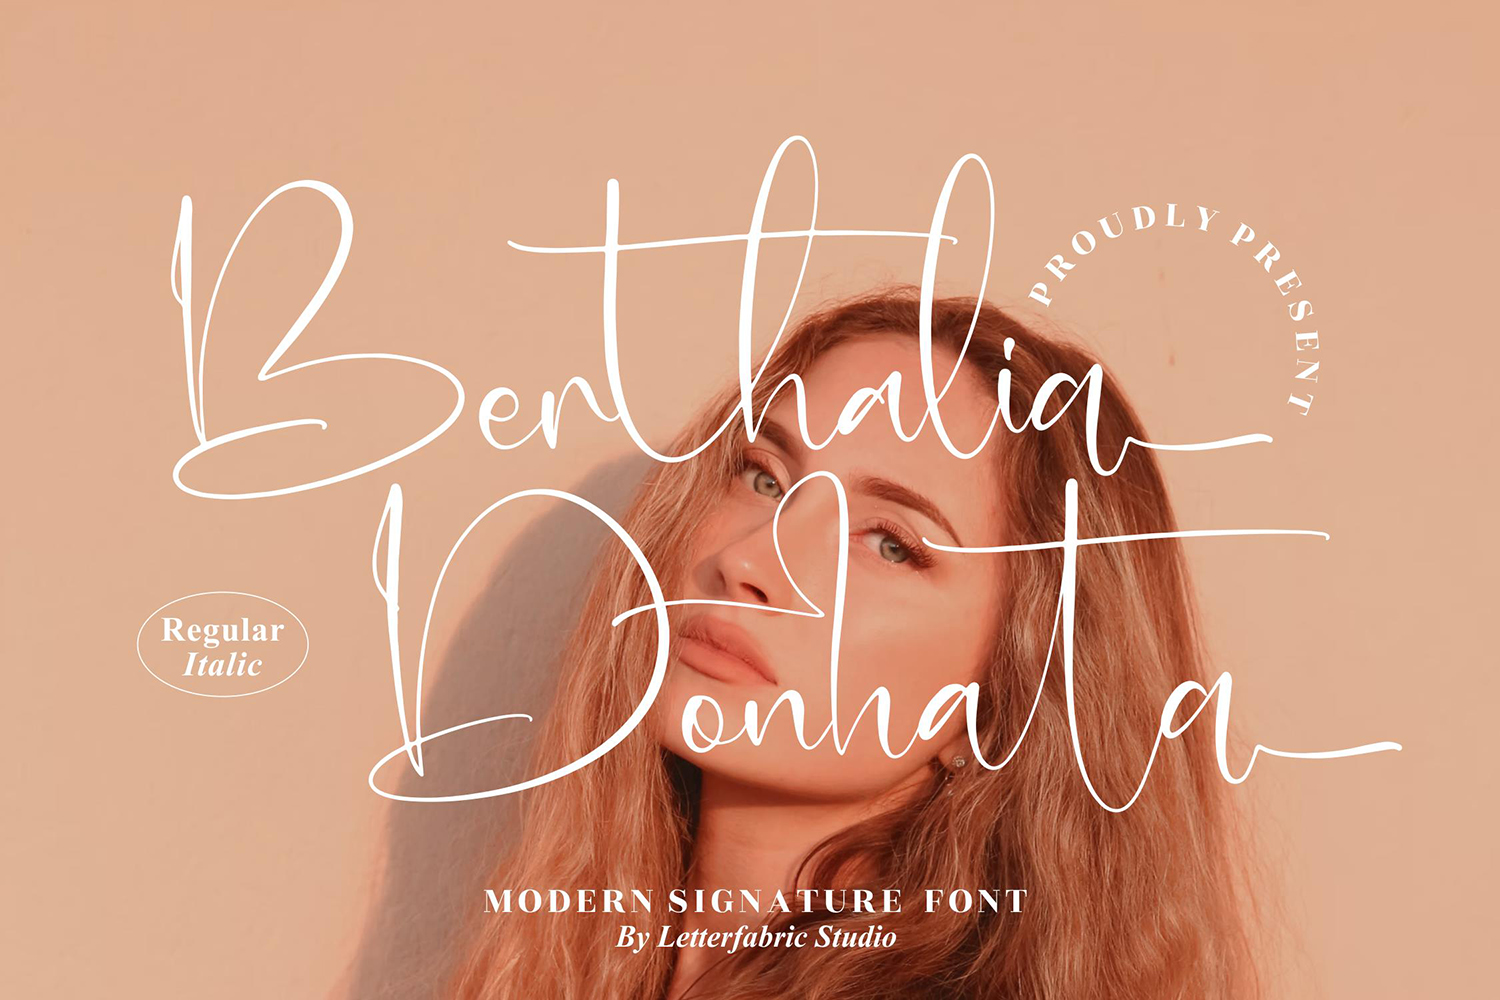 Berthalia Donatha Free Font